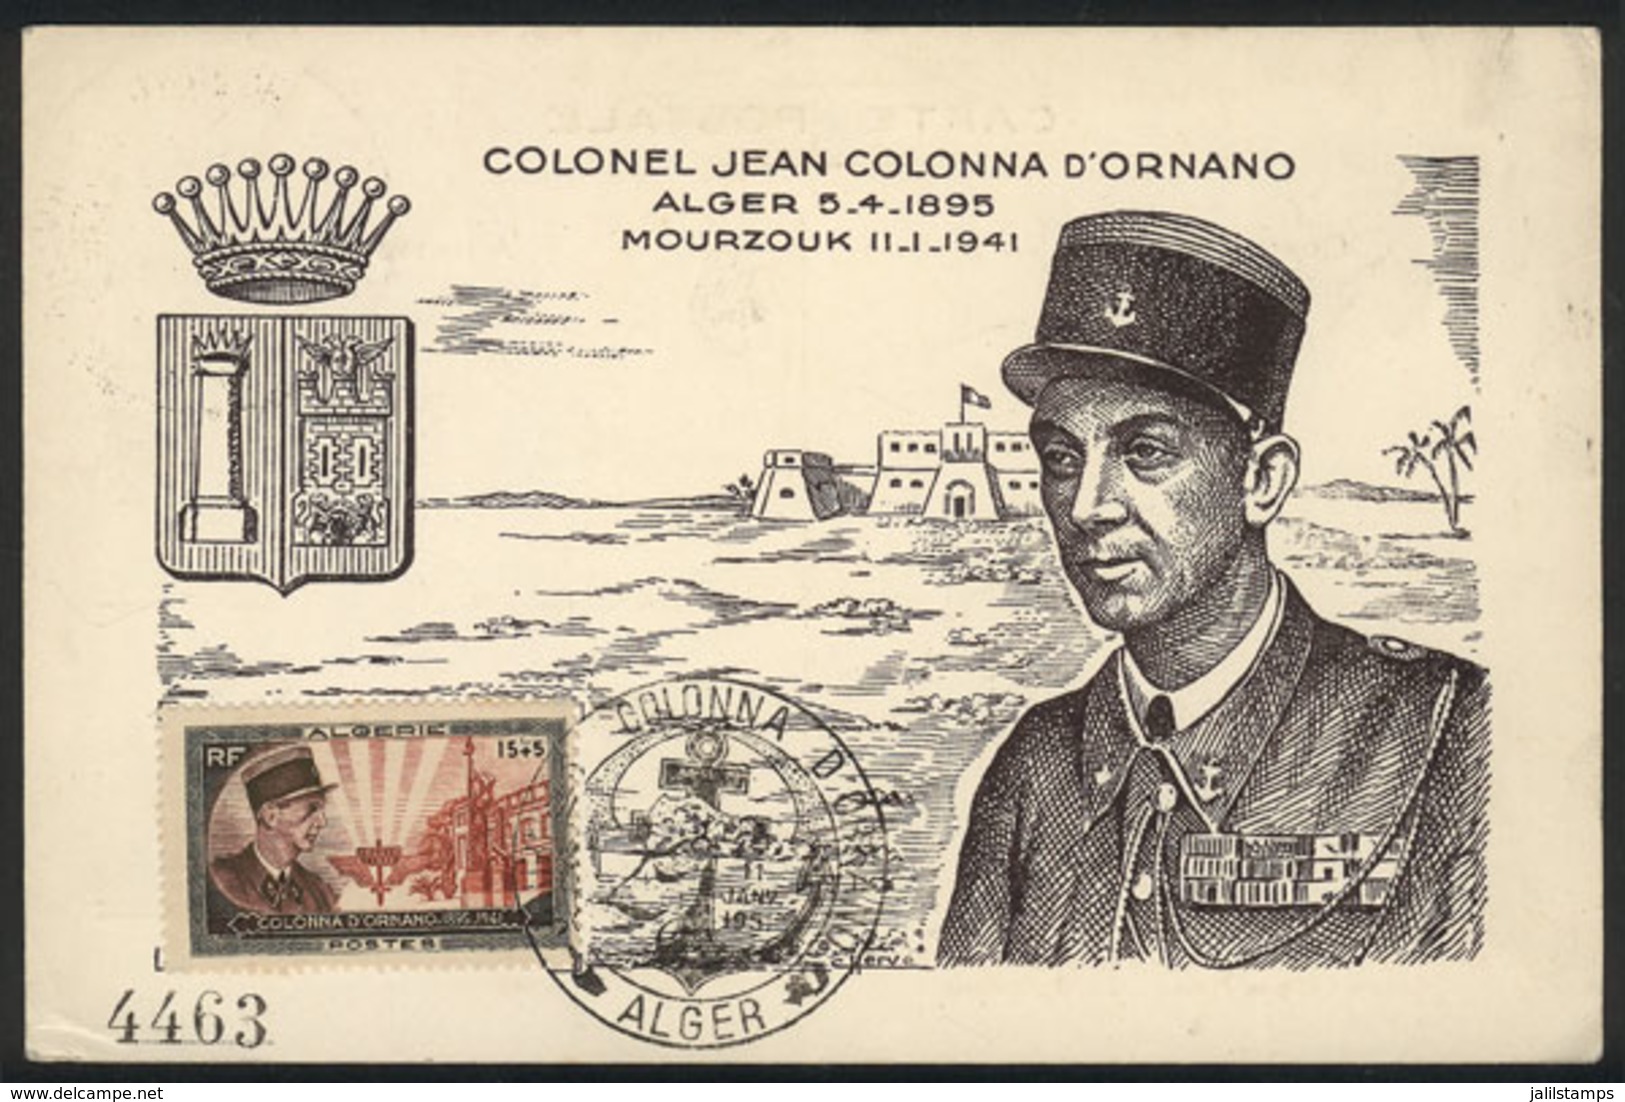 181 ALGERIA: Cnel. Jean Colonna D'Ornano, French Explorer, Maximum Card Of JA/1951, VF Quality - Maximum Cards